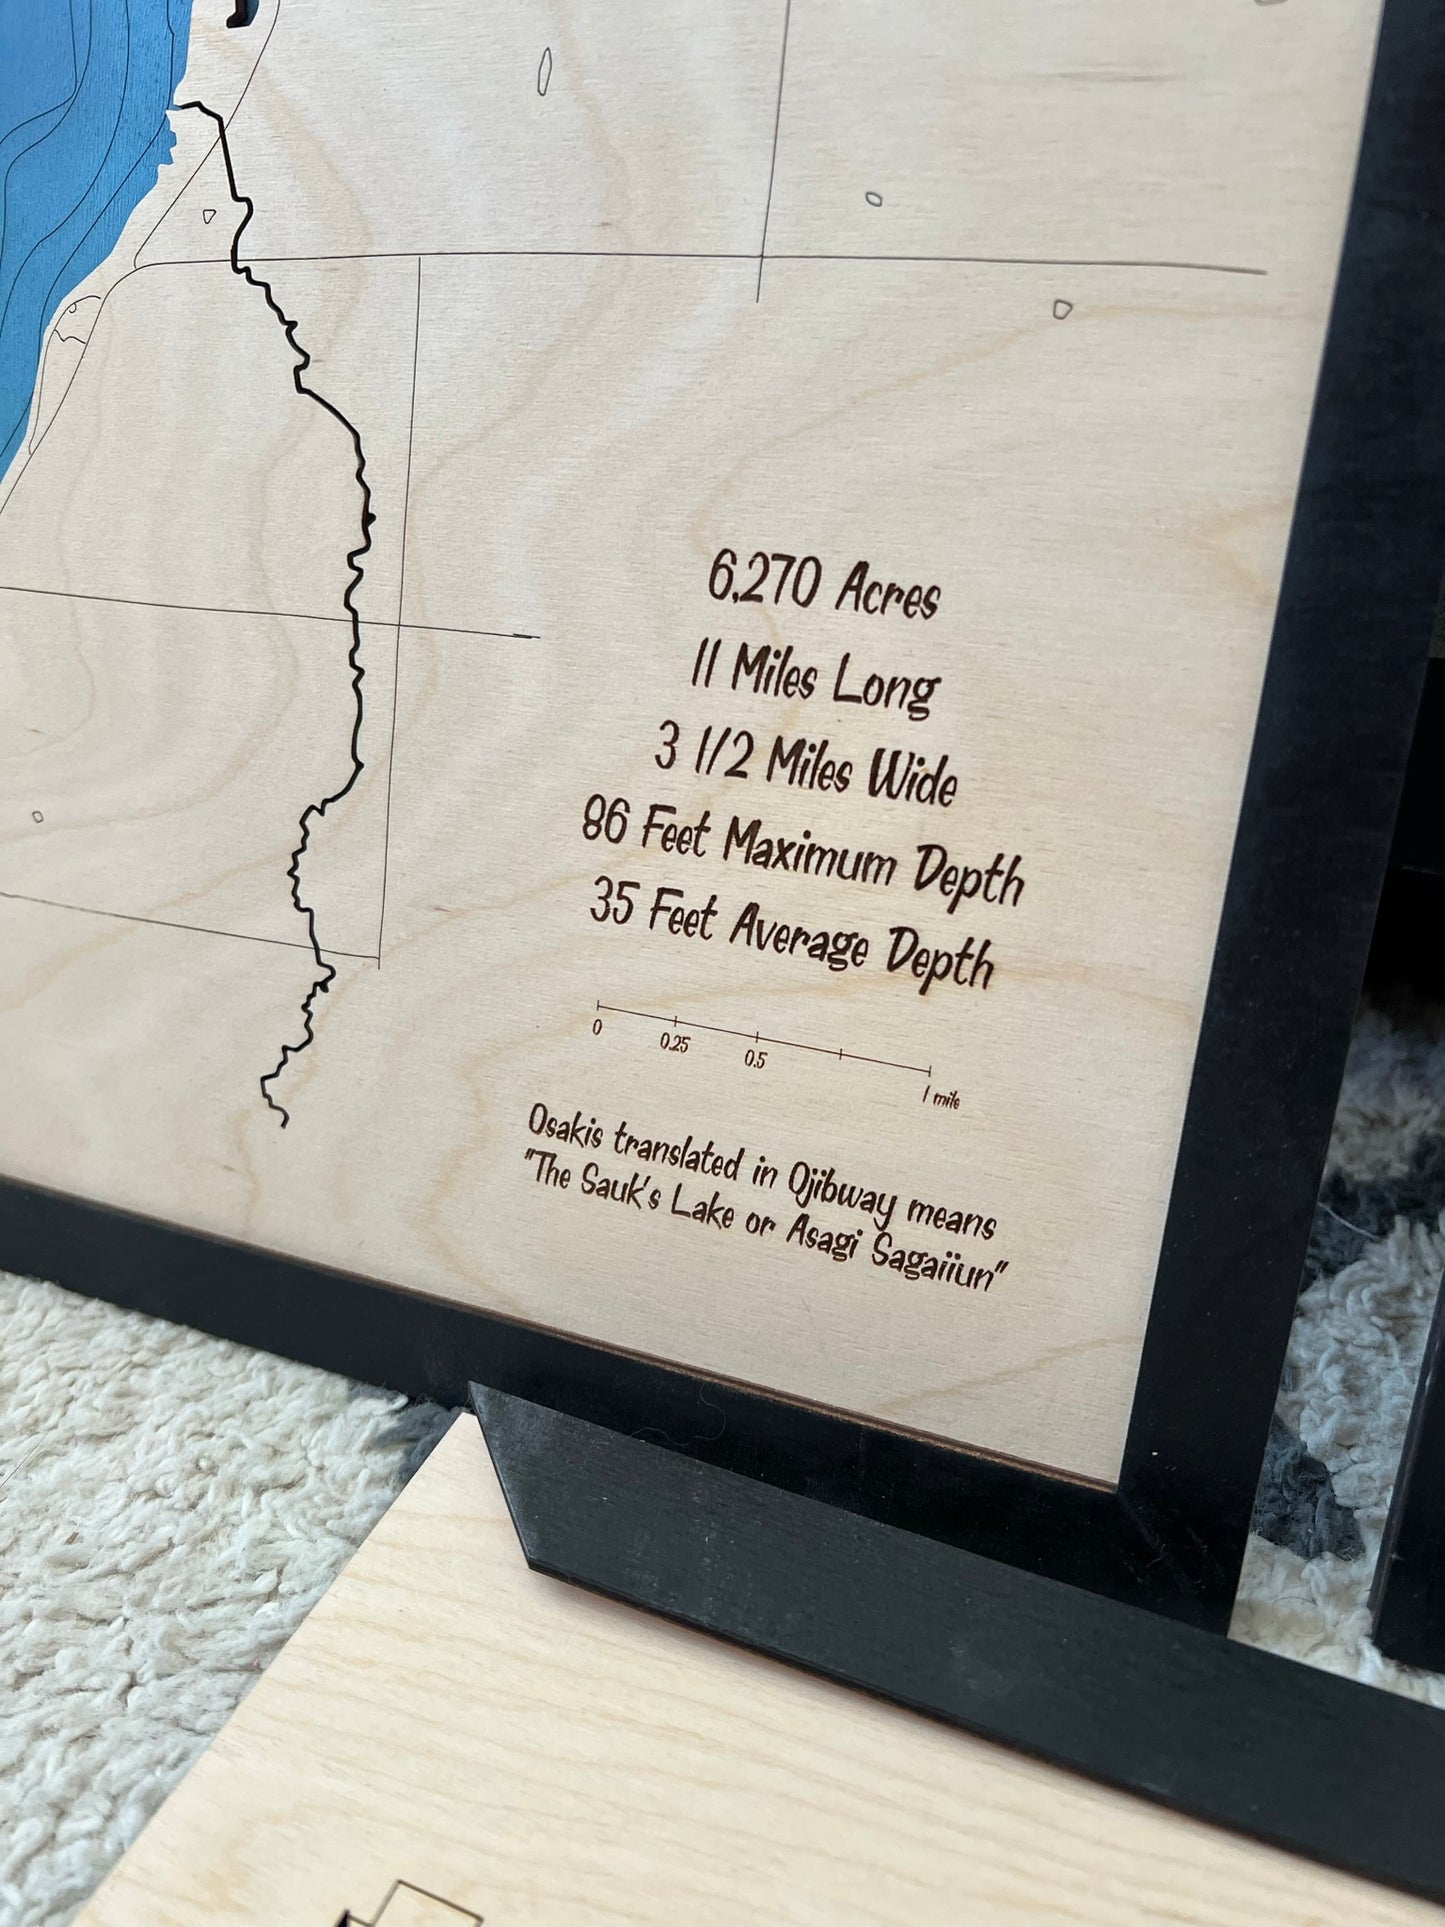 Lake Osakis Minnesota - Laser Engraved Map File